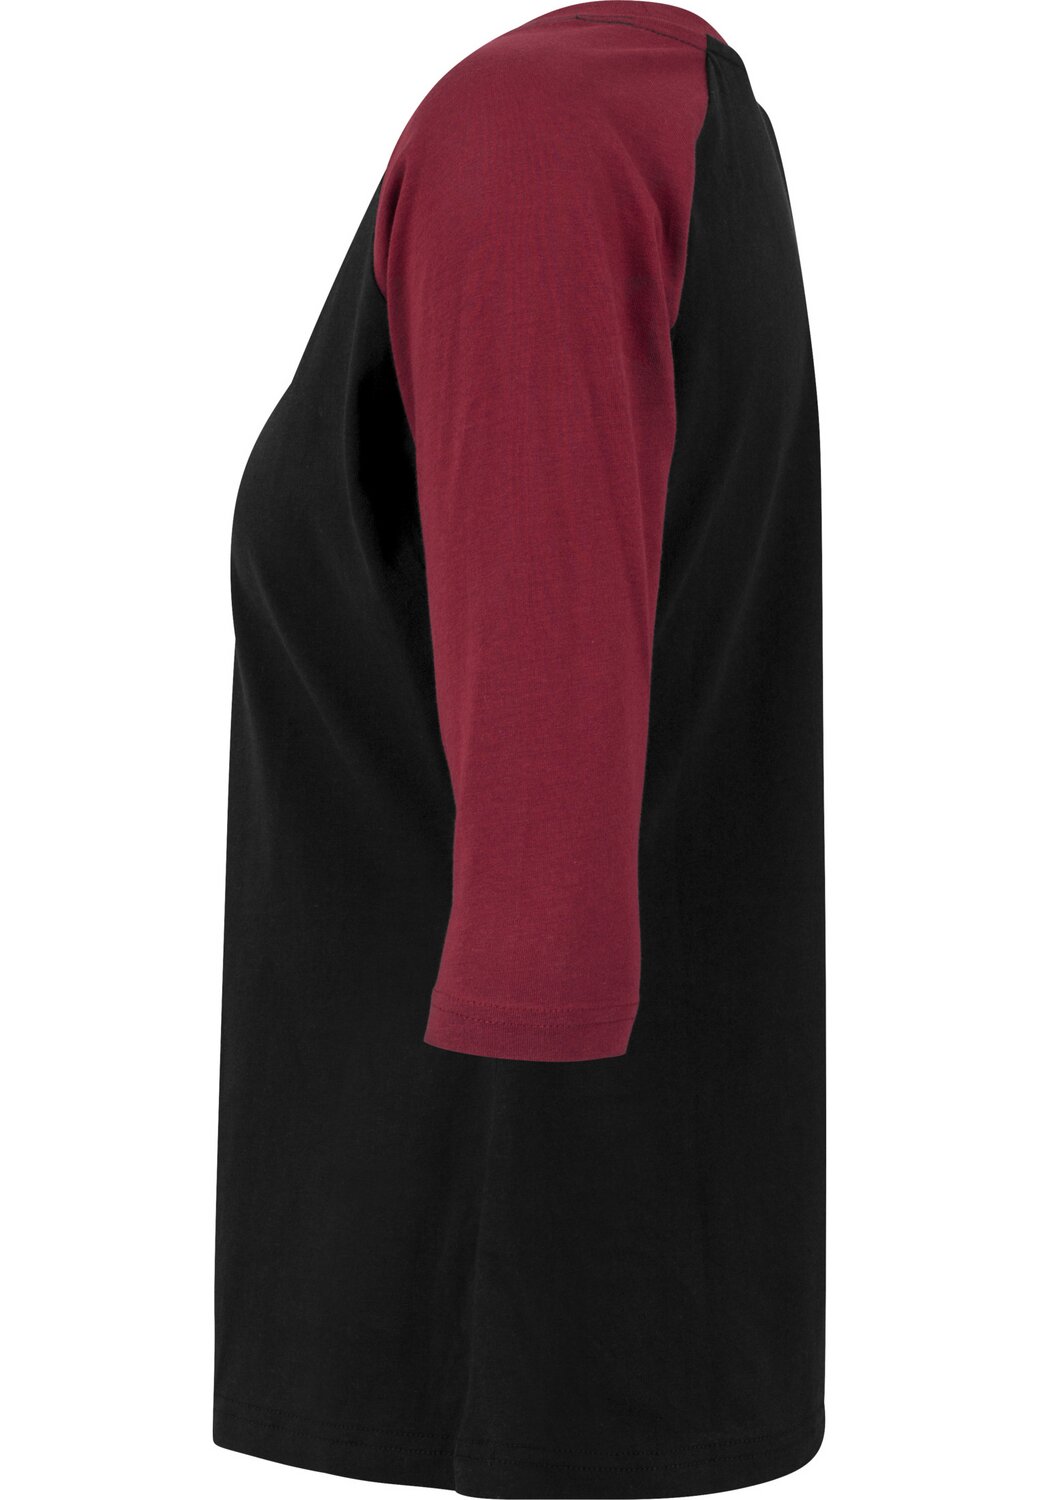 MAXISCOOT black/burgundy 3/4 | Ladies T-Shirt Raglan Contrast